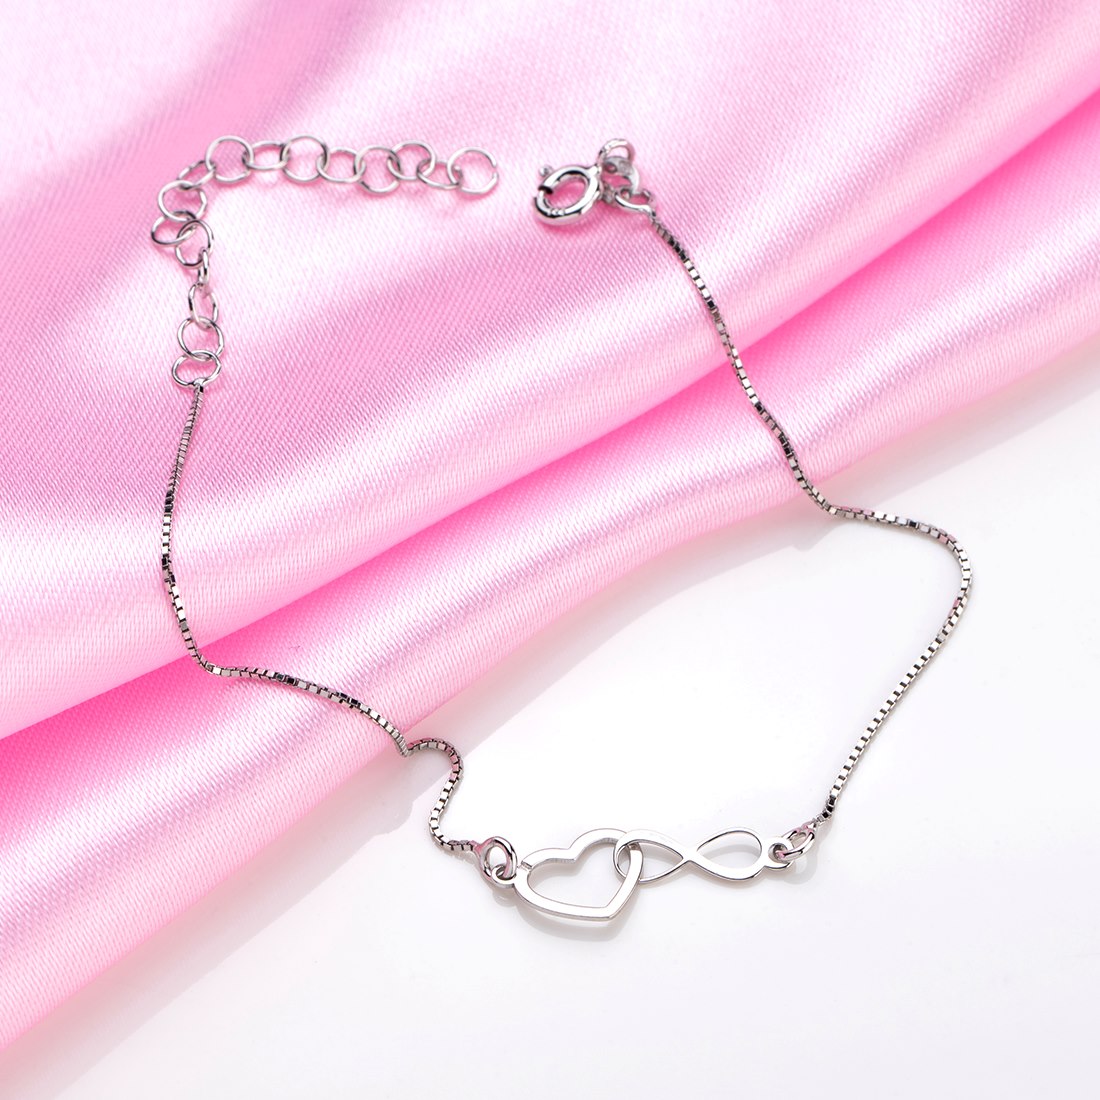 Heartfelt Infinity Rhodium-Plated Box Chain Adjustable Bracelet